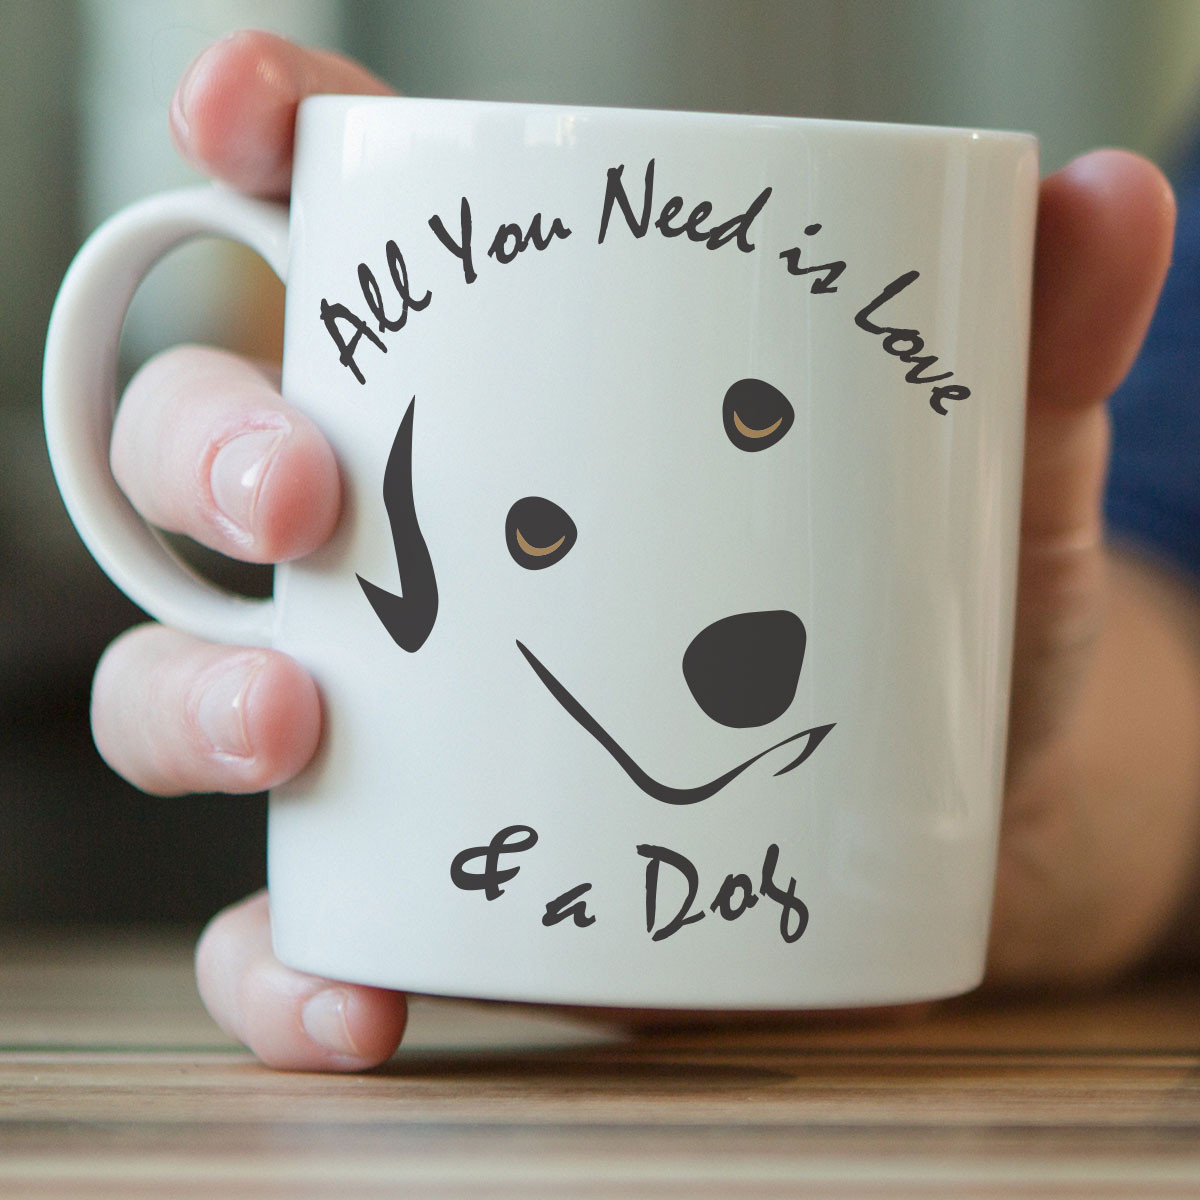 All you need is love and a dog mug